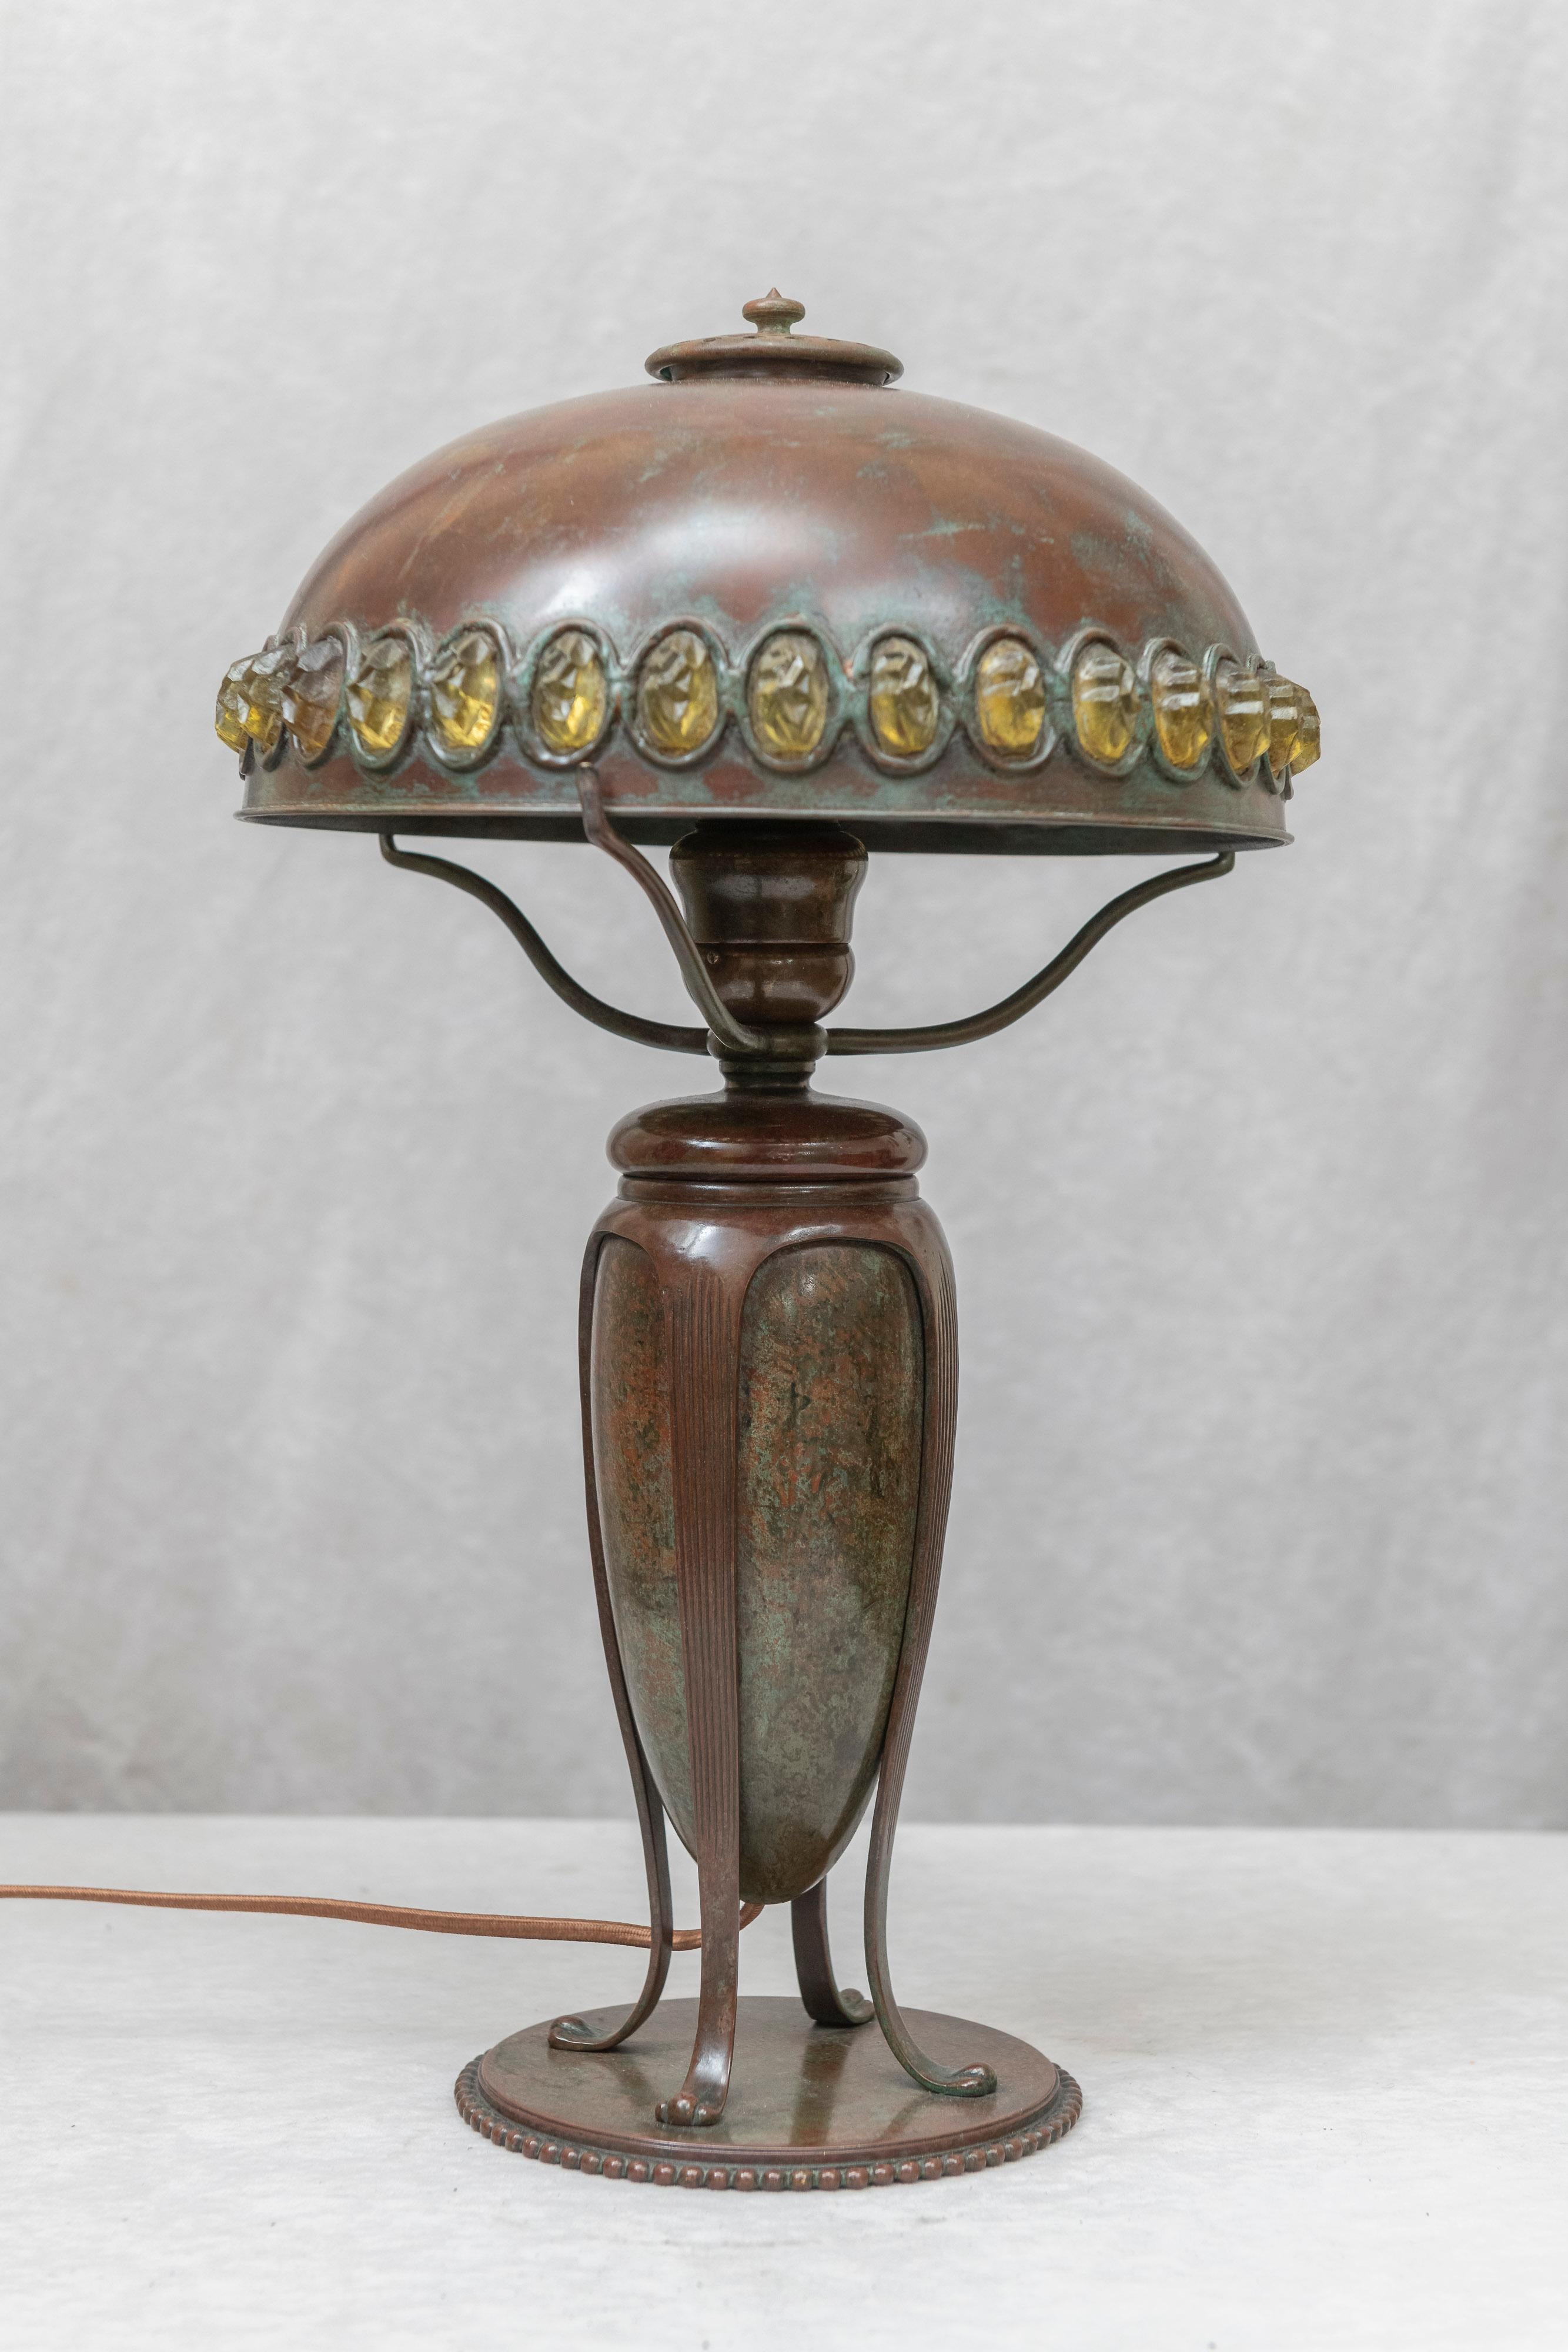 20th Century Tiffany Studios Table Lamp with Jeweled Shade, circa 1905